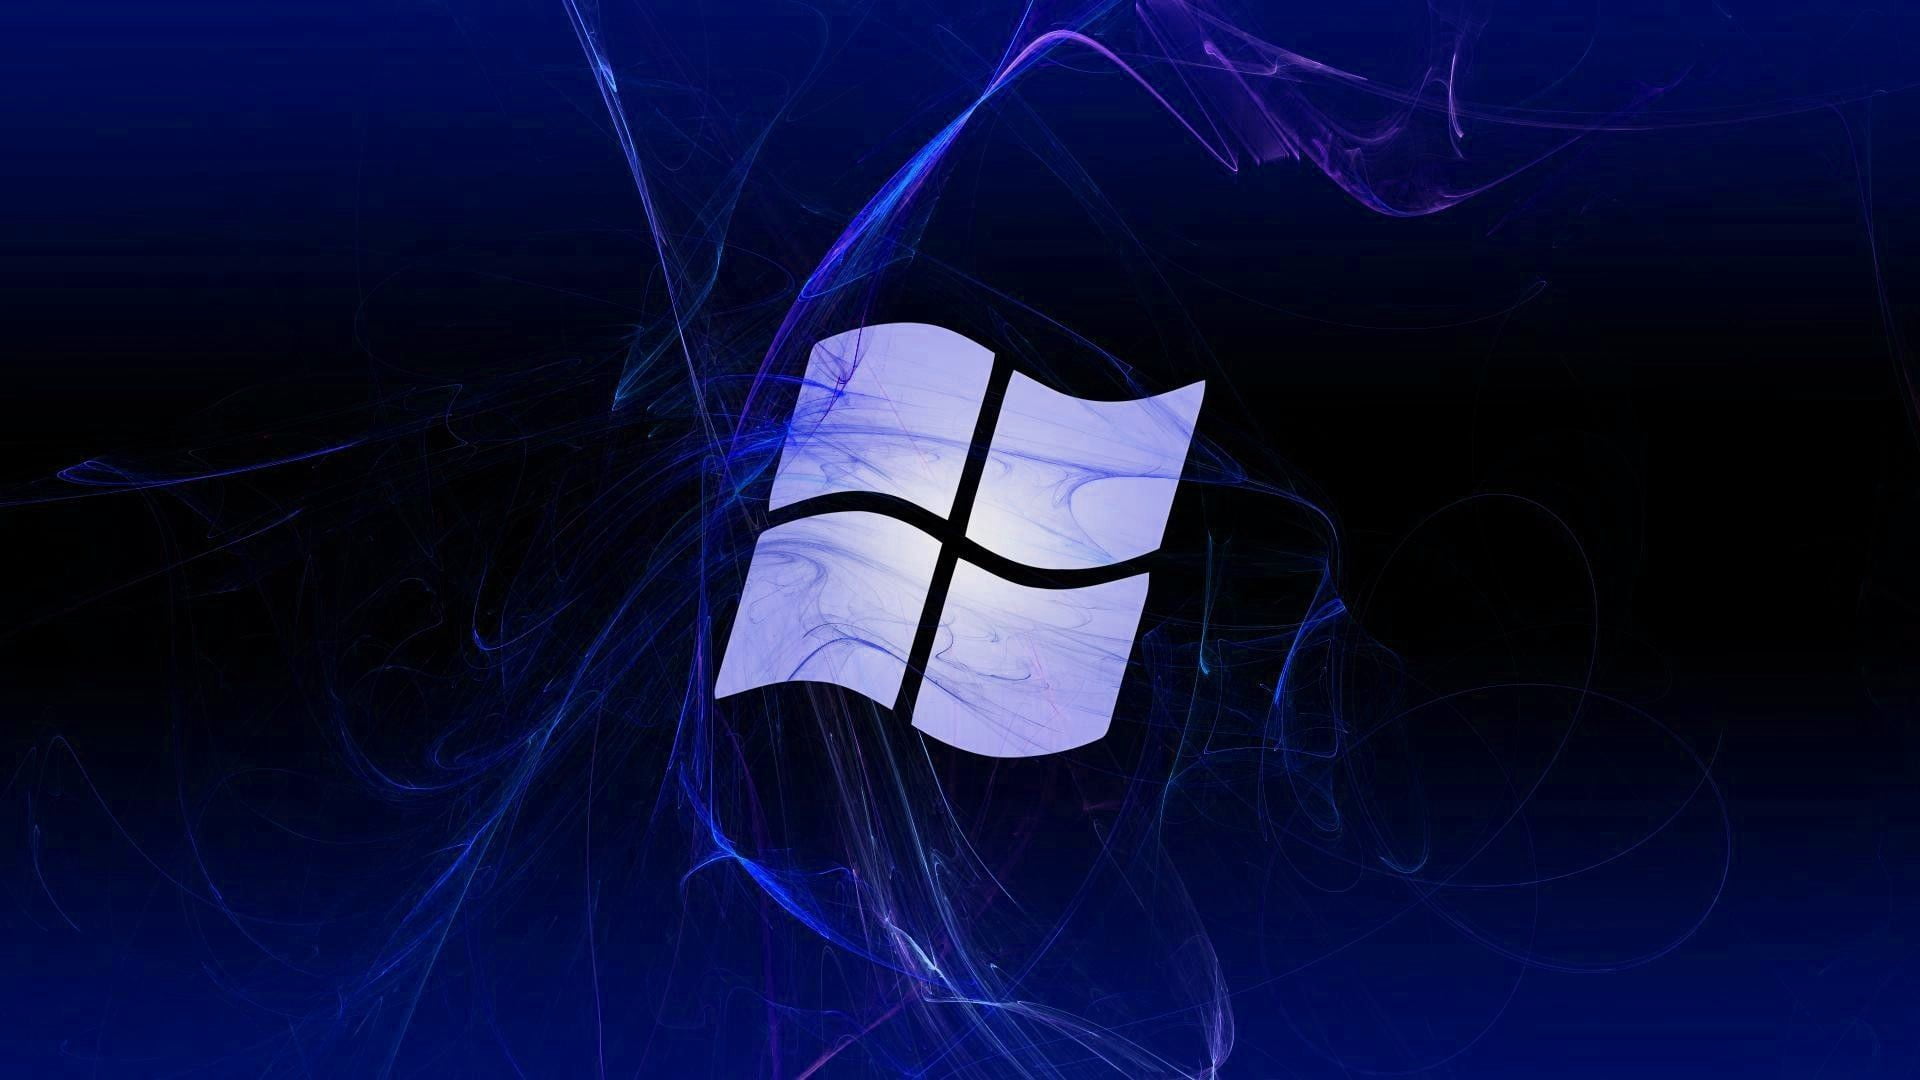 Windows logo, Windows 10, Windows 8, no people, shoe, indoors